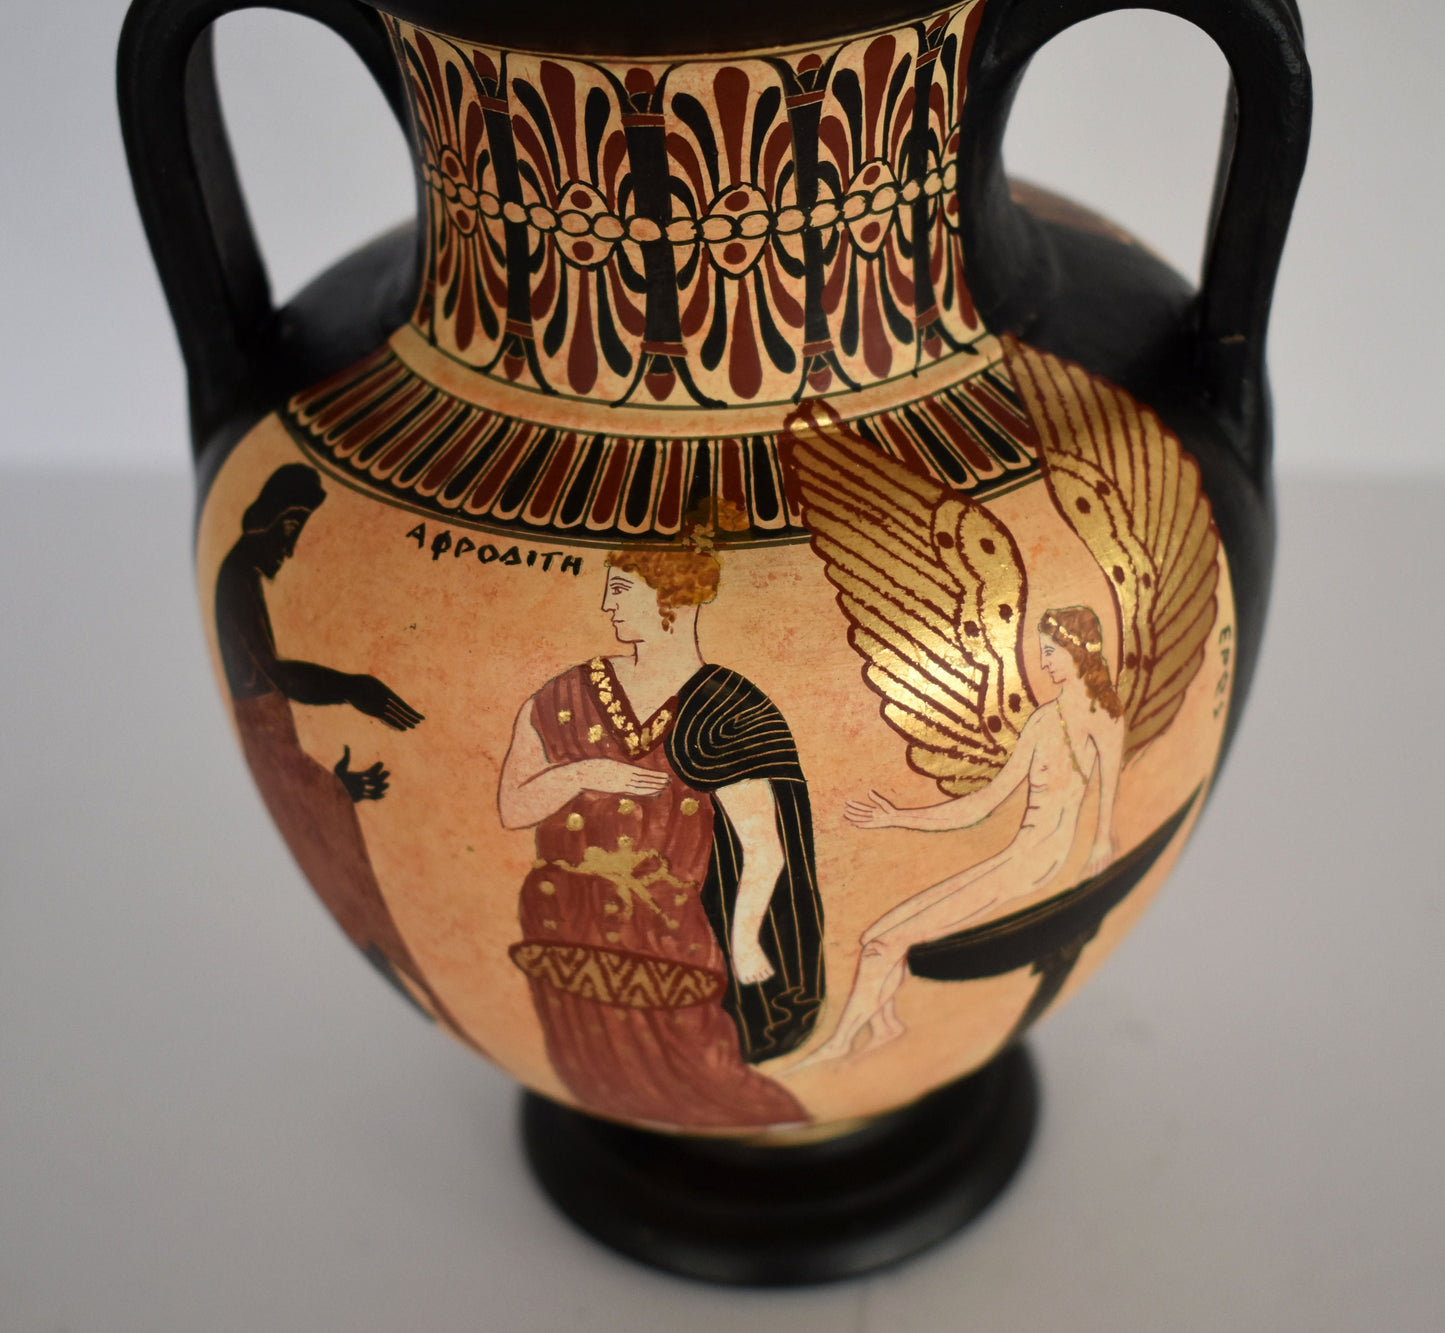 Aphrodite Venus, Goddess of Love, Beauty - Eros Cupid, God of Love, Desire - Floral Motif - Classic Period - 600 BC - Ceramic Vase